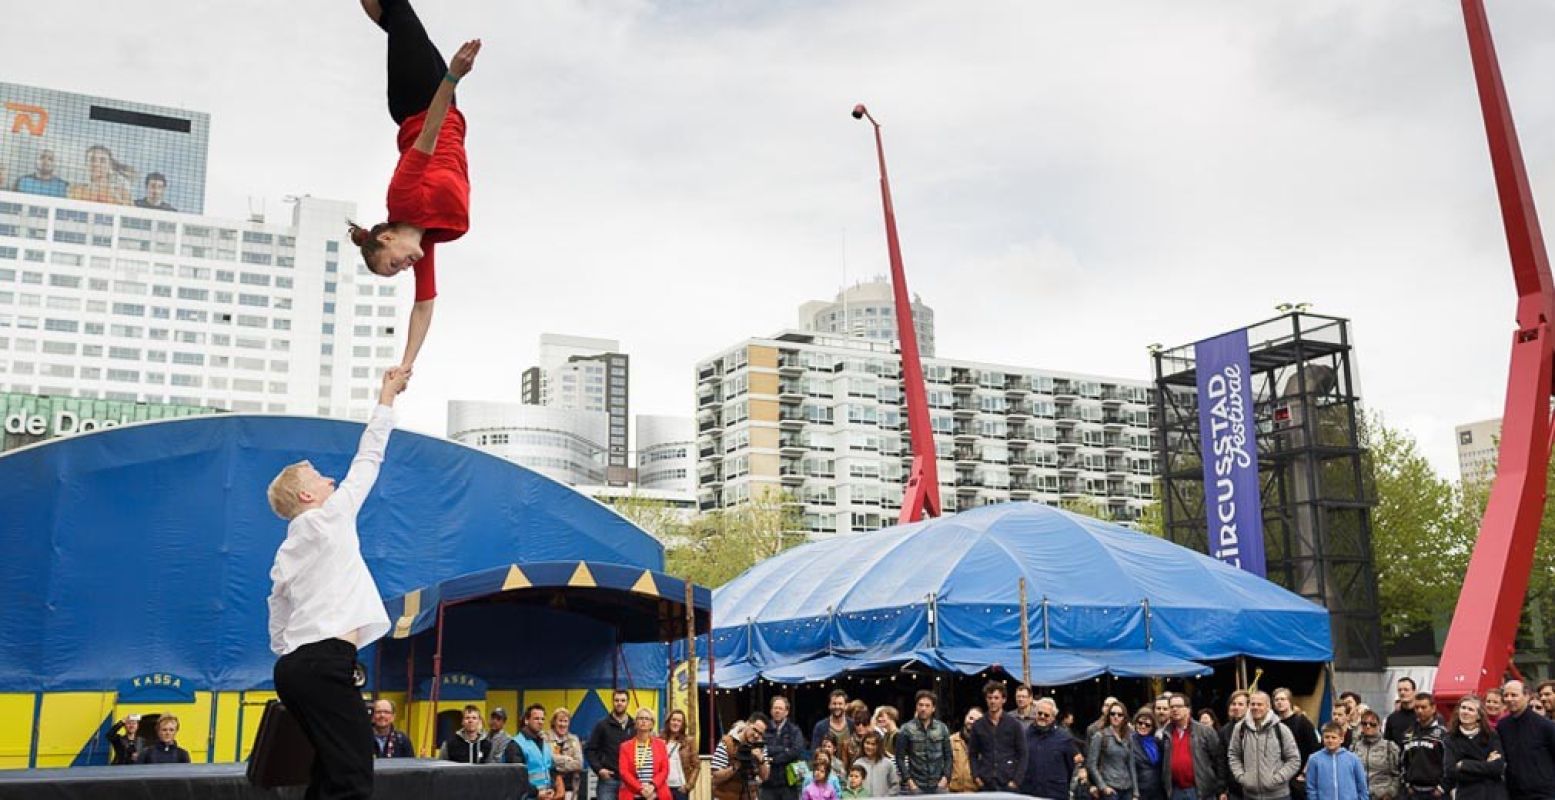 Circusstad Festival Rotterdam is leuk voor jong en oud. Foto: Fred Ernst